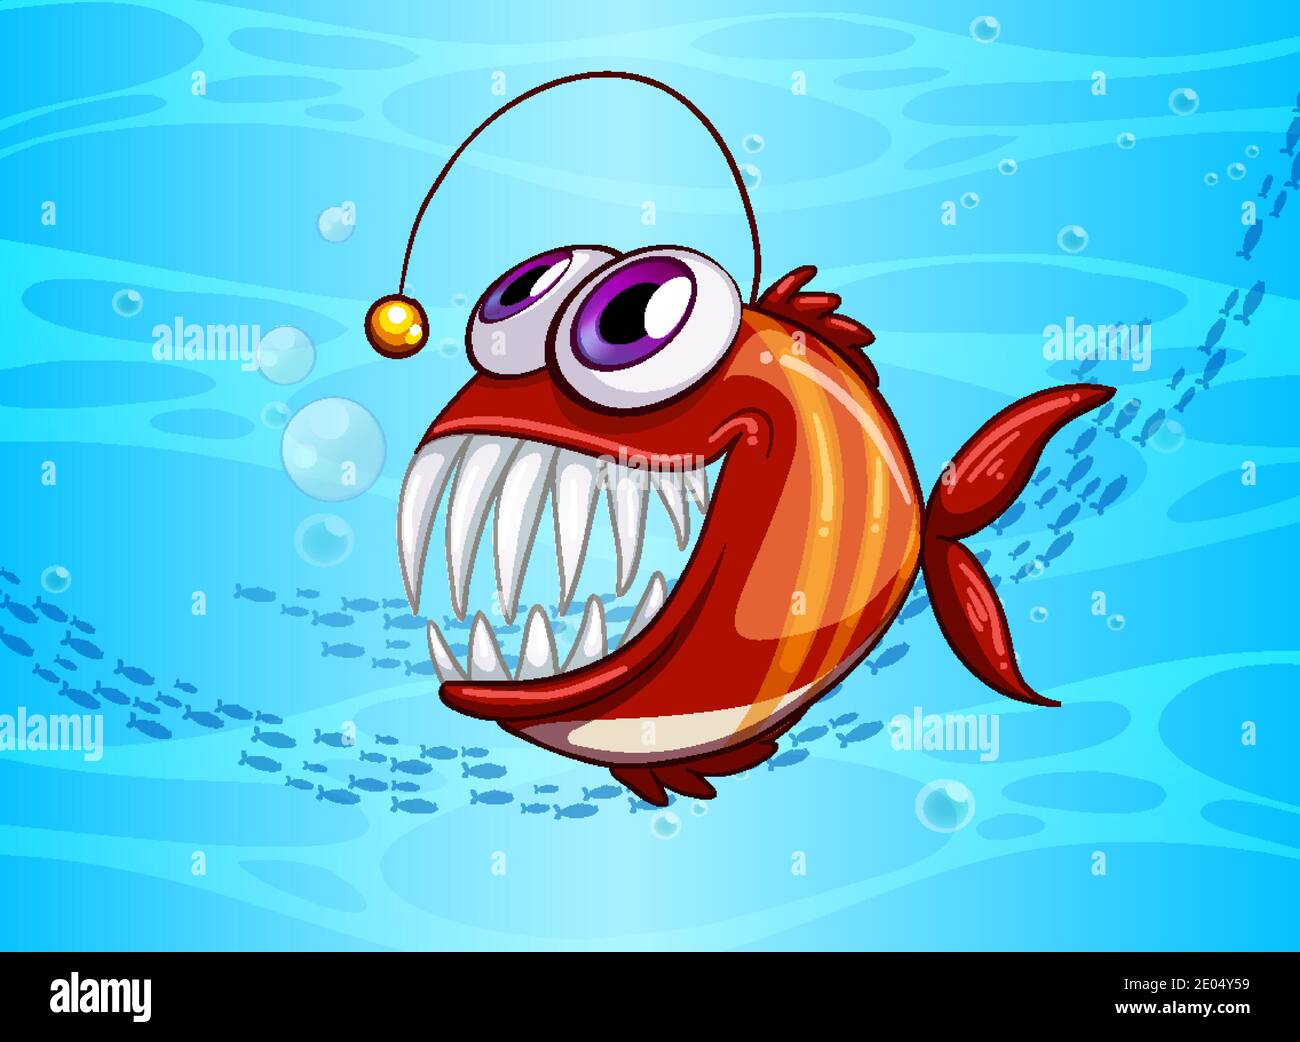 https://c8.alamy.com/comp/2E04Y59/angler-fish-cartoon-character-in-the-underwater-scene-illustration-2E04Y59.jpg